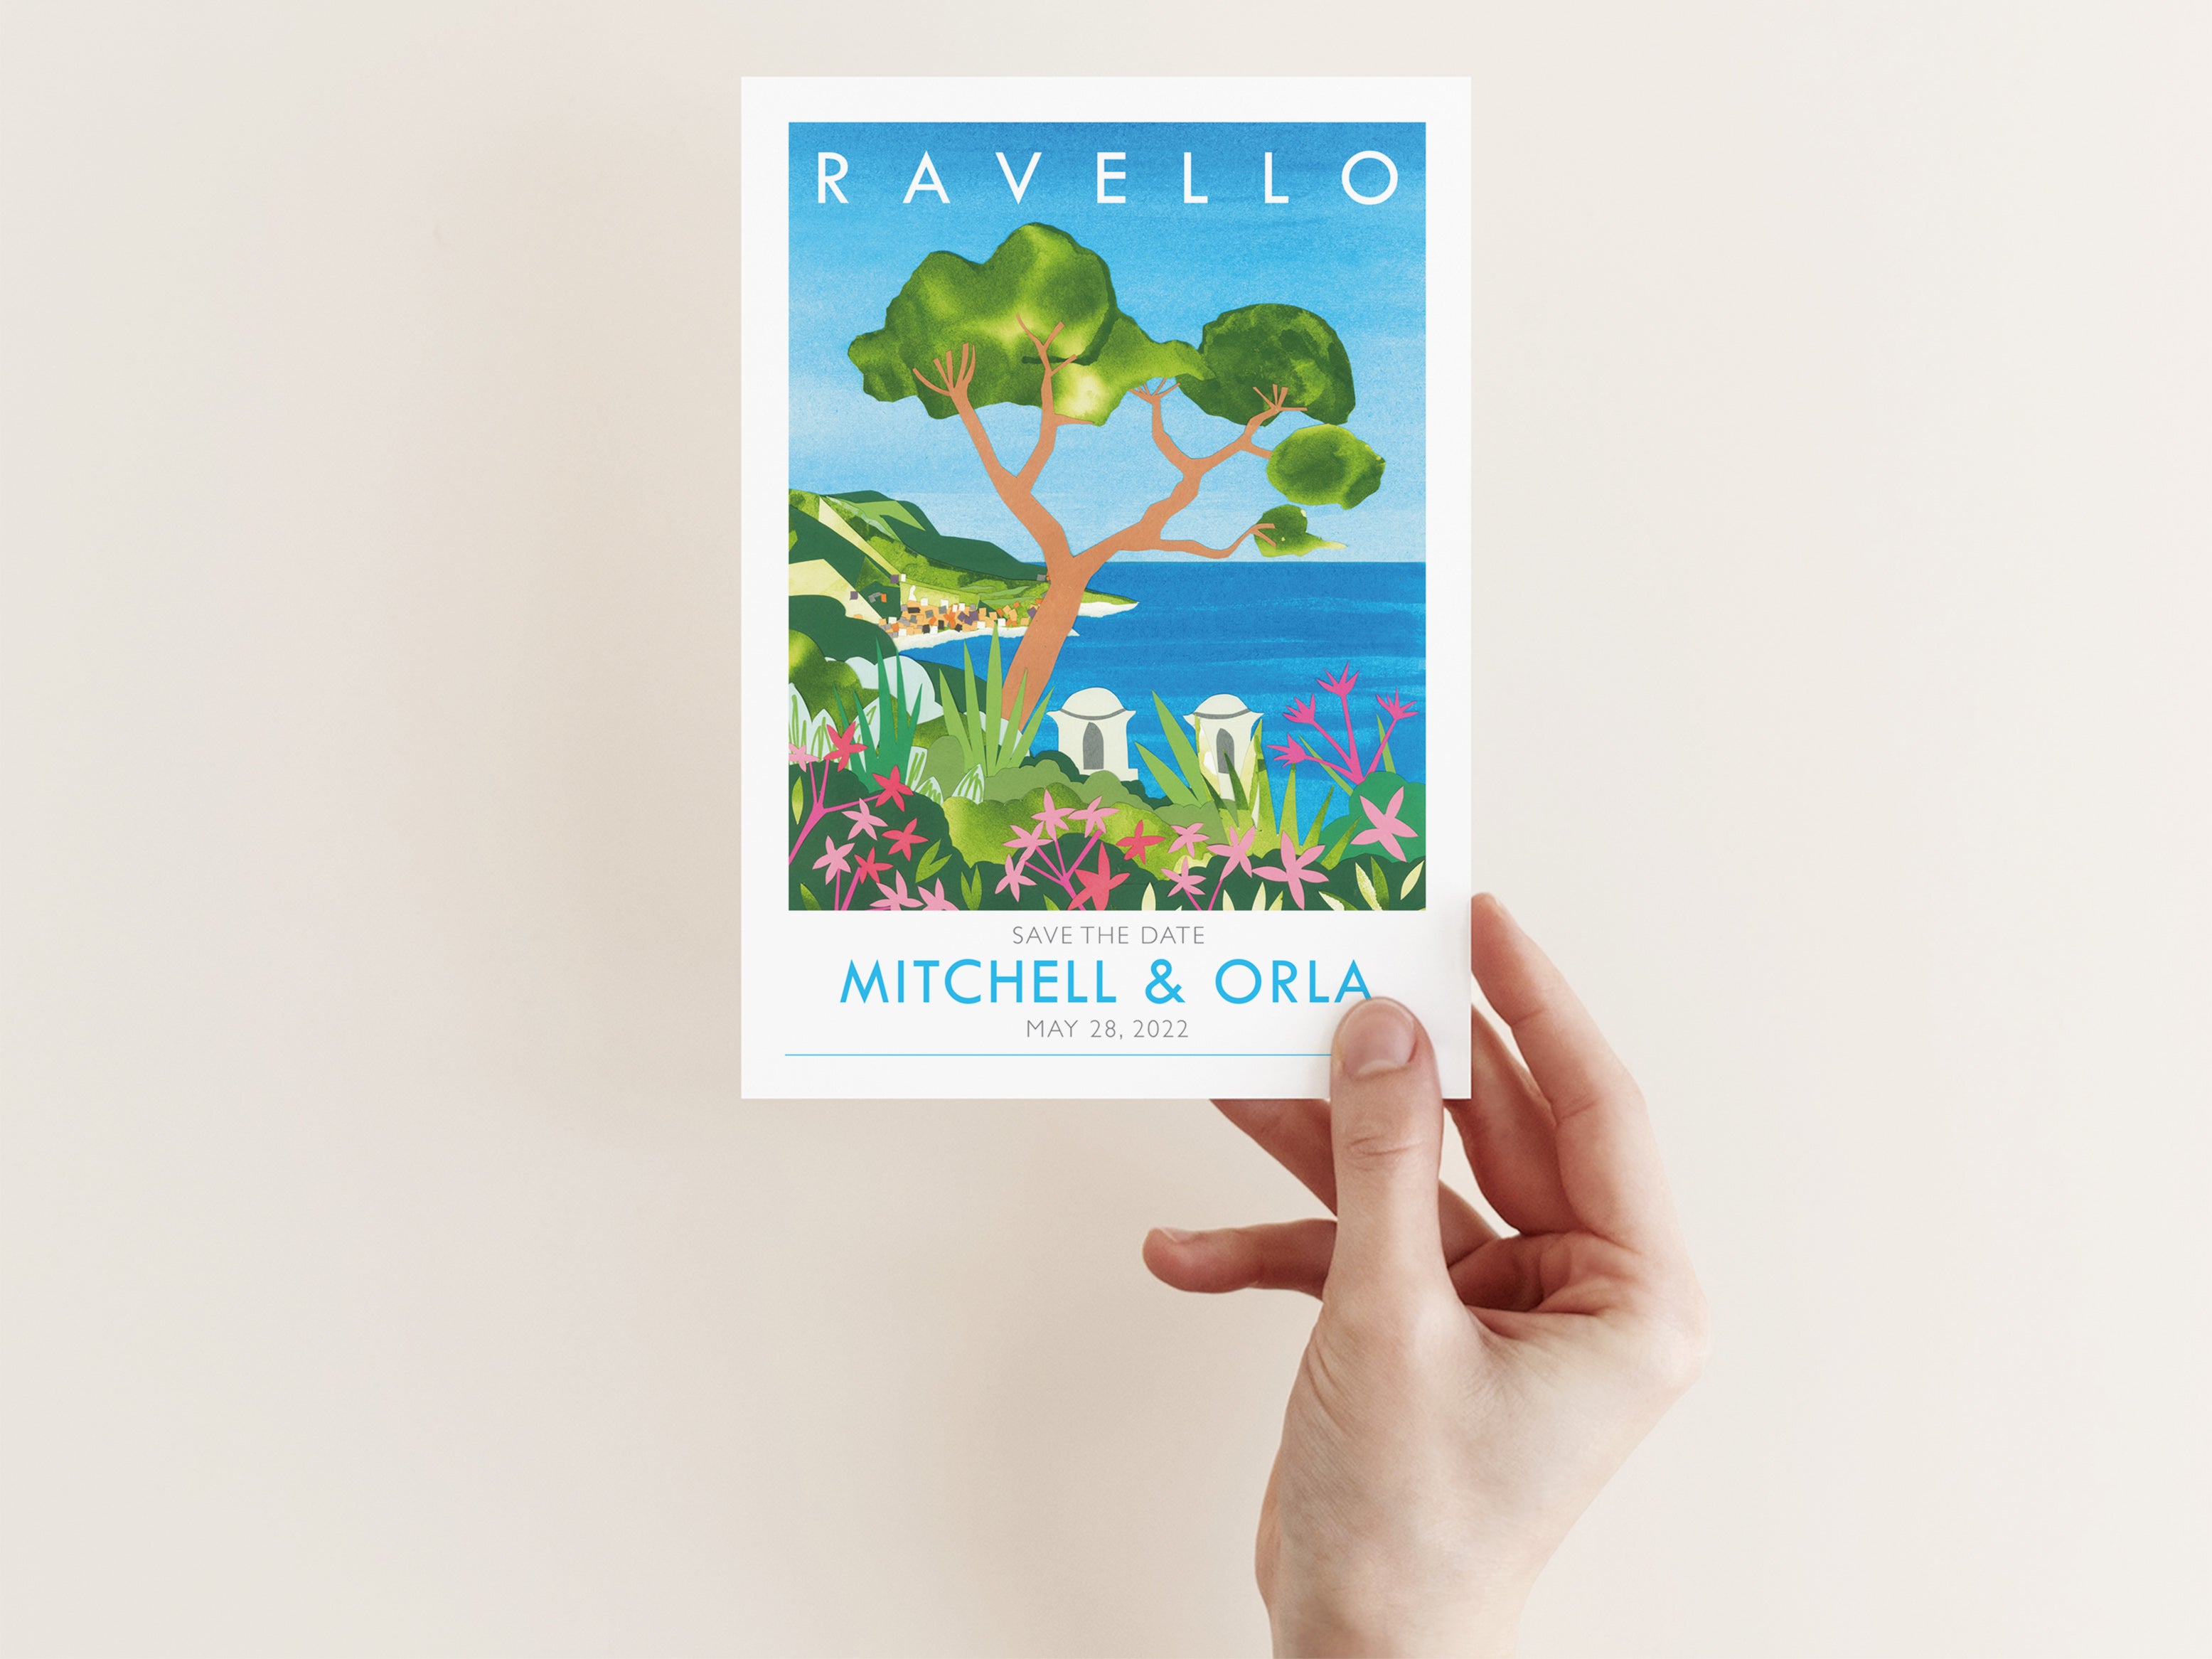 Ravello wedding invitations for Amalfi Coast wedding